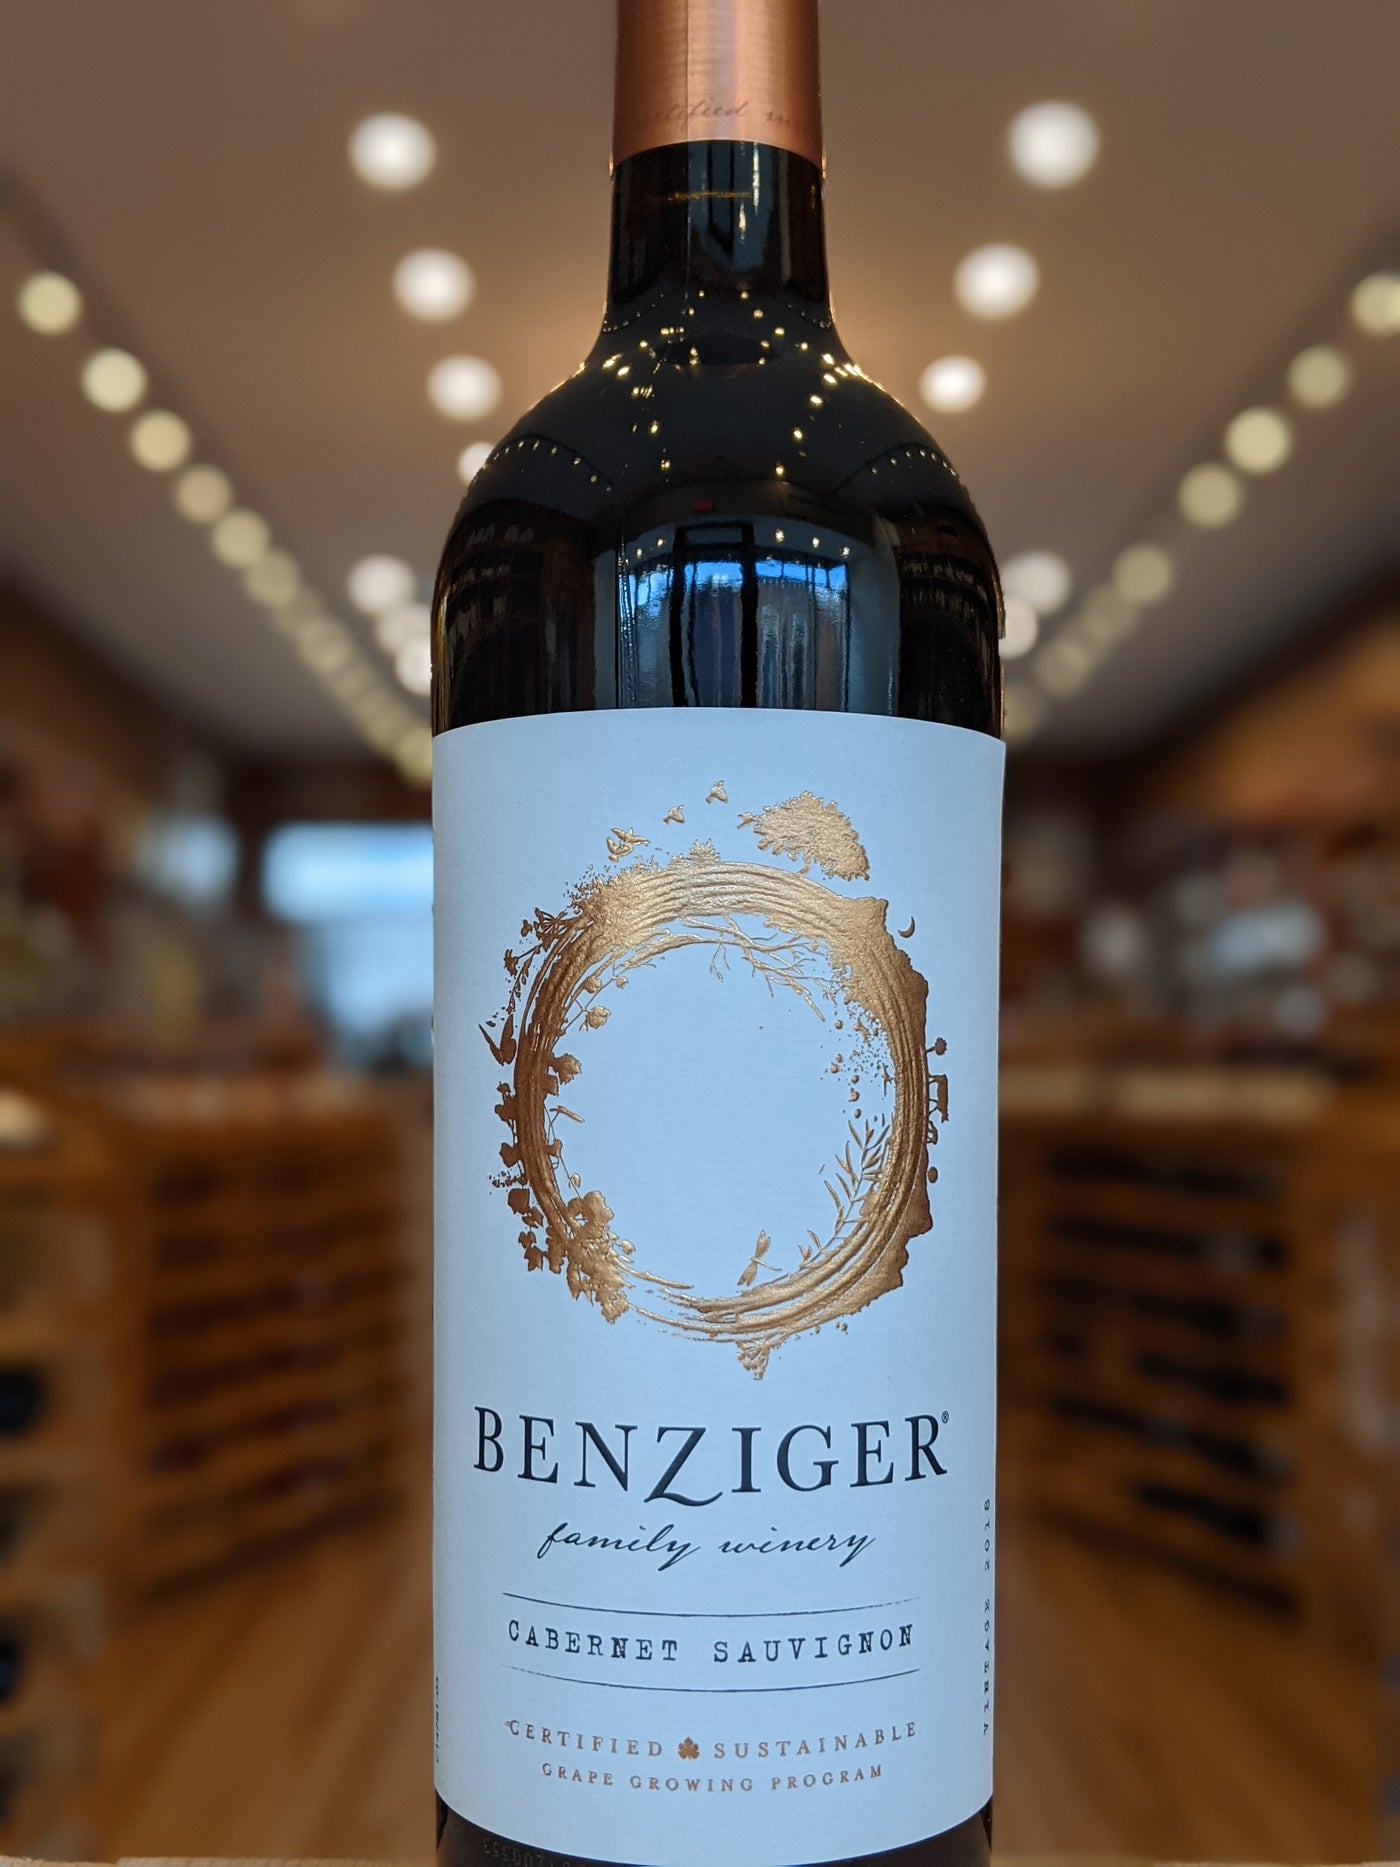 Benziger Family Winery Cabernet Sauvignon 2018